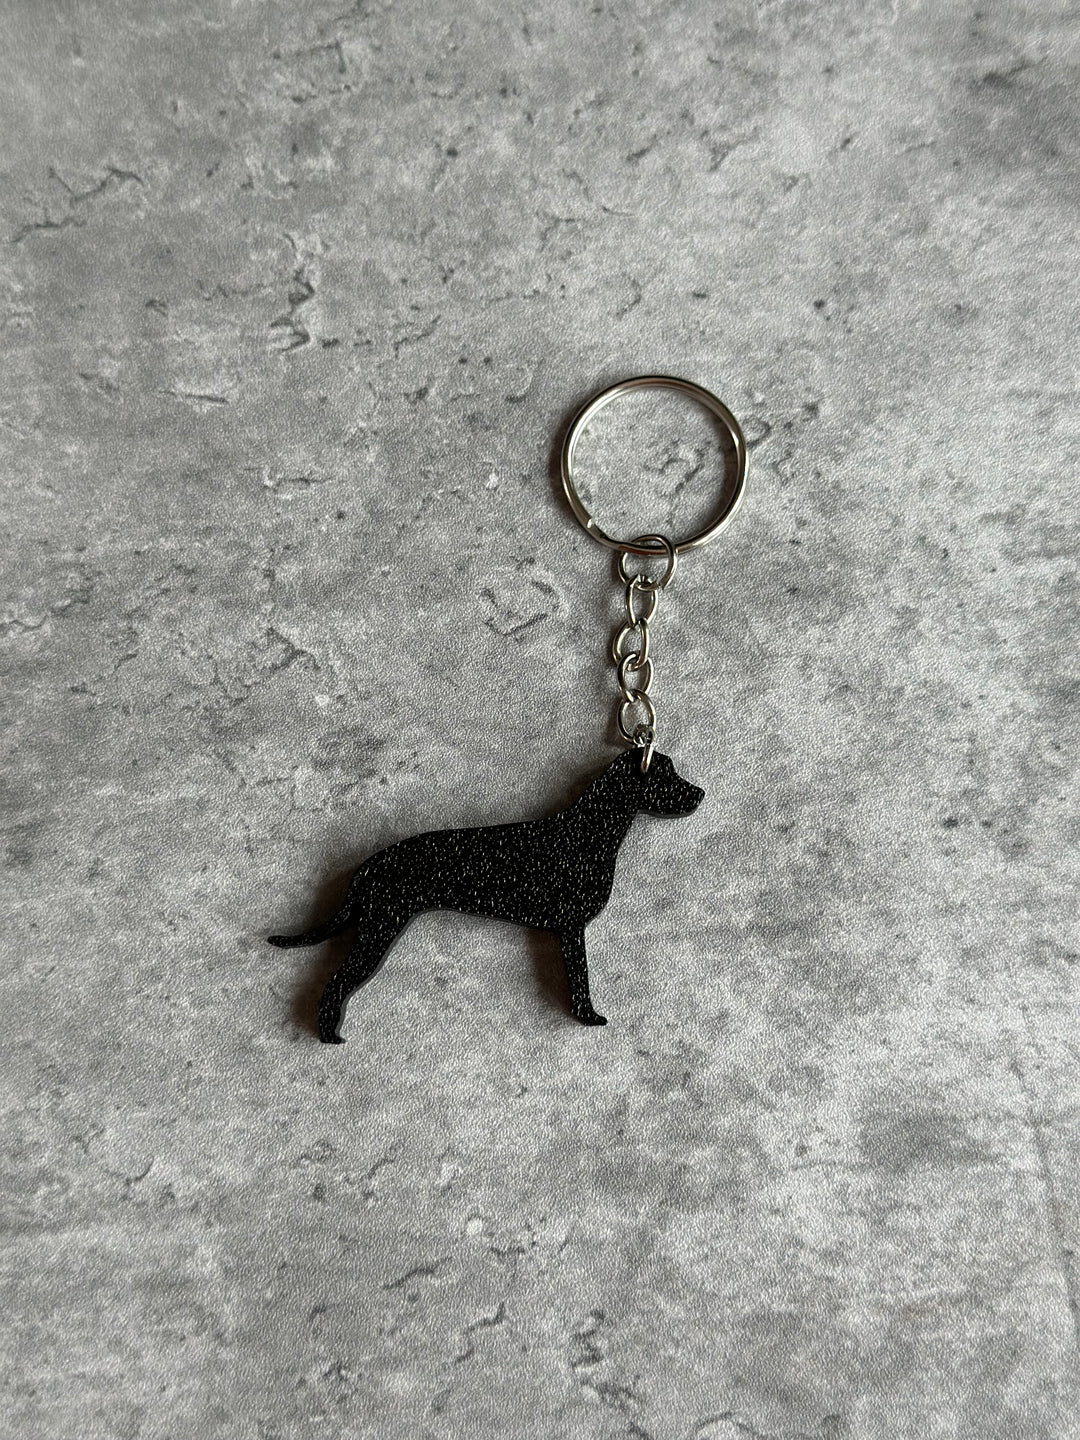 Dalmation Dog Keyring Stl File | 3D Printed | Qniue Personalised Gifts